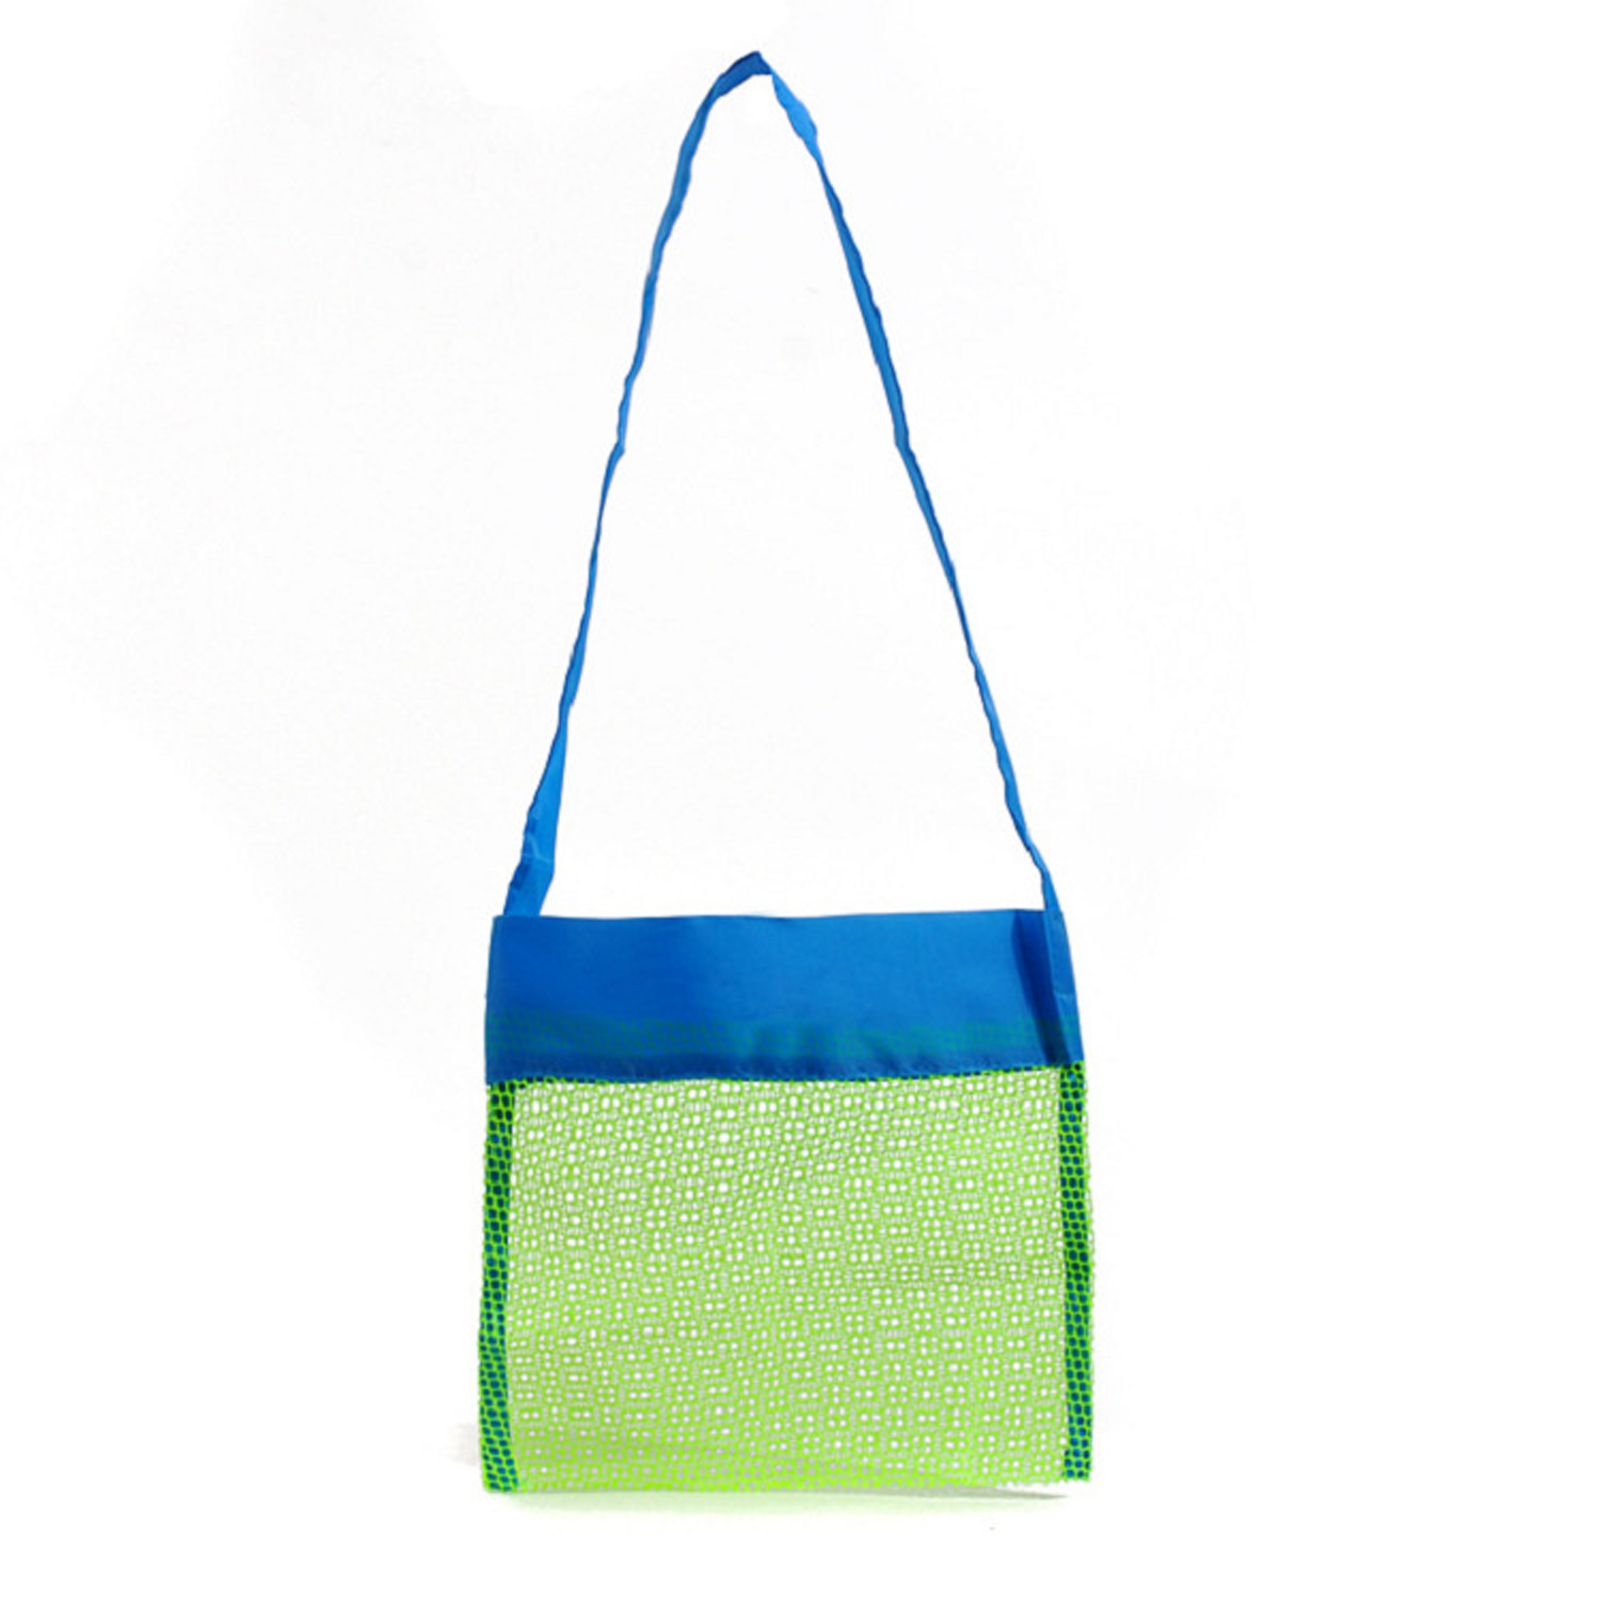 Mesh Beach Tote Bag Extra Large Foldable Storage Bag Lightweight Quick Dry Beach Toys Organizer Handbag Green Net Blue belt large